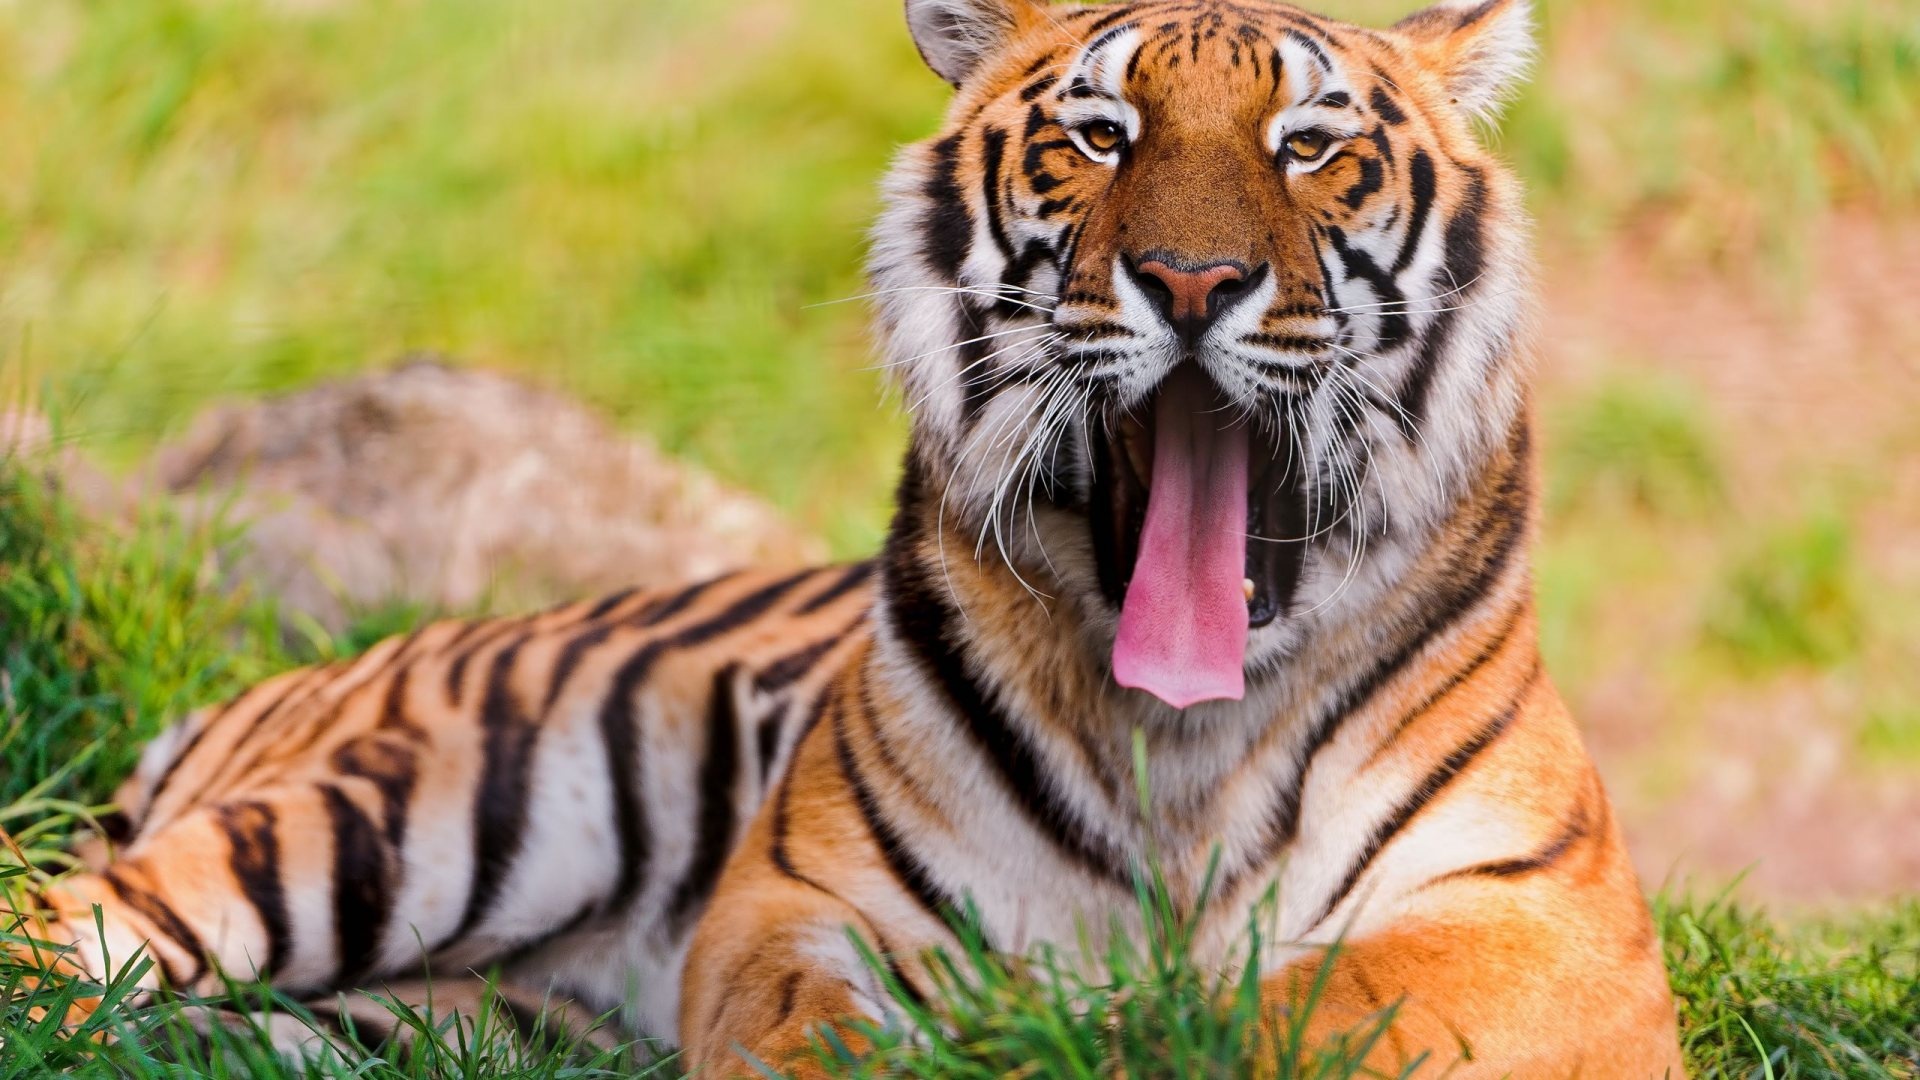 Bengal Tiger Tiger Pictures Tiger Wallpaper Tiger Images - Riset